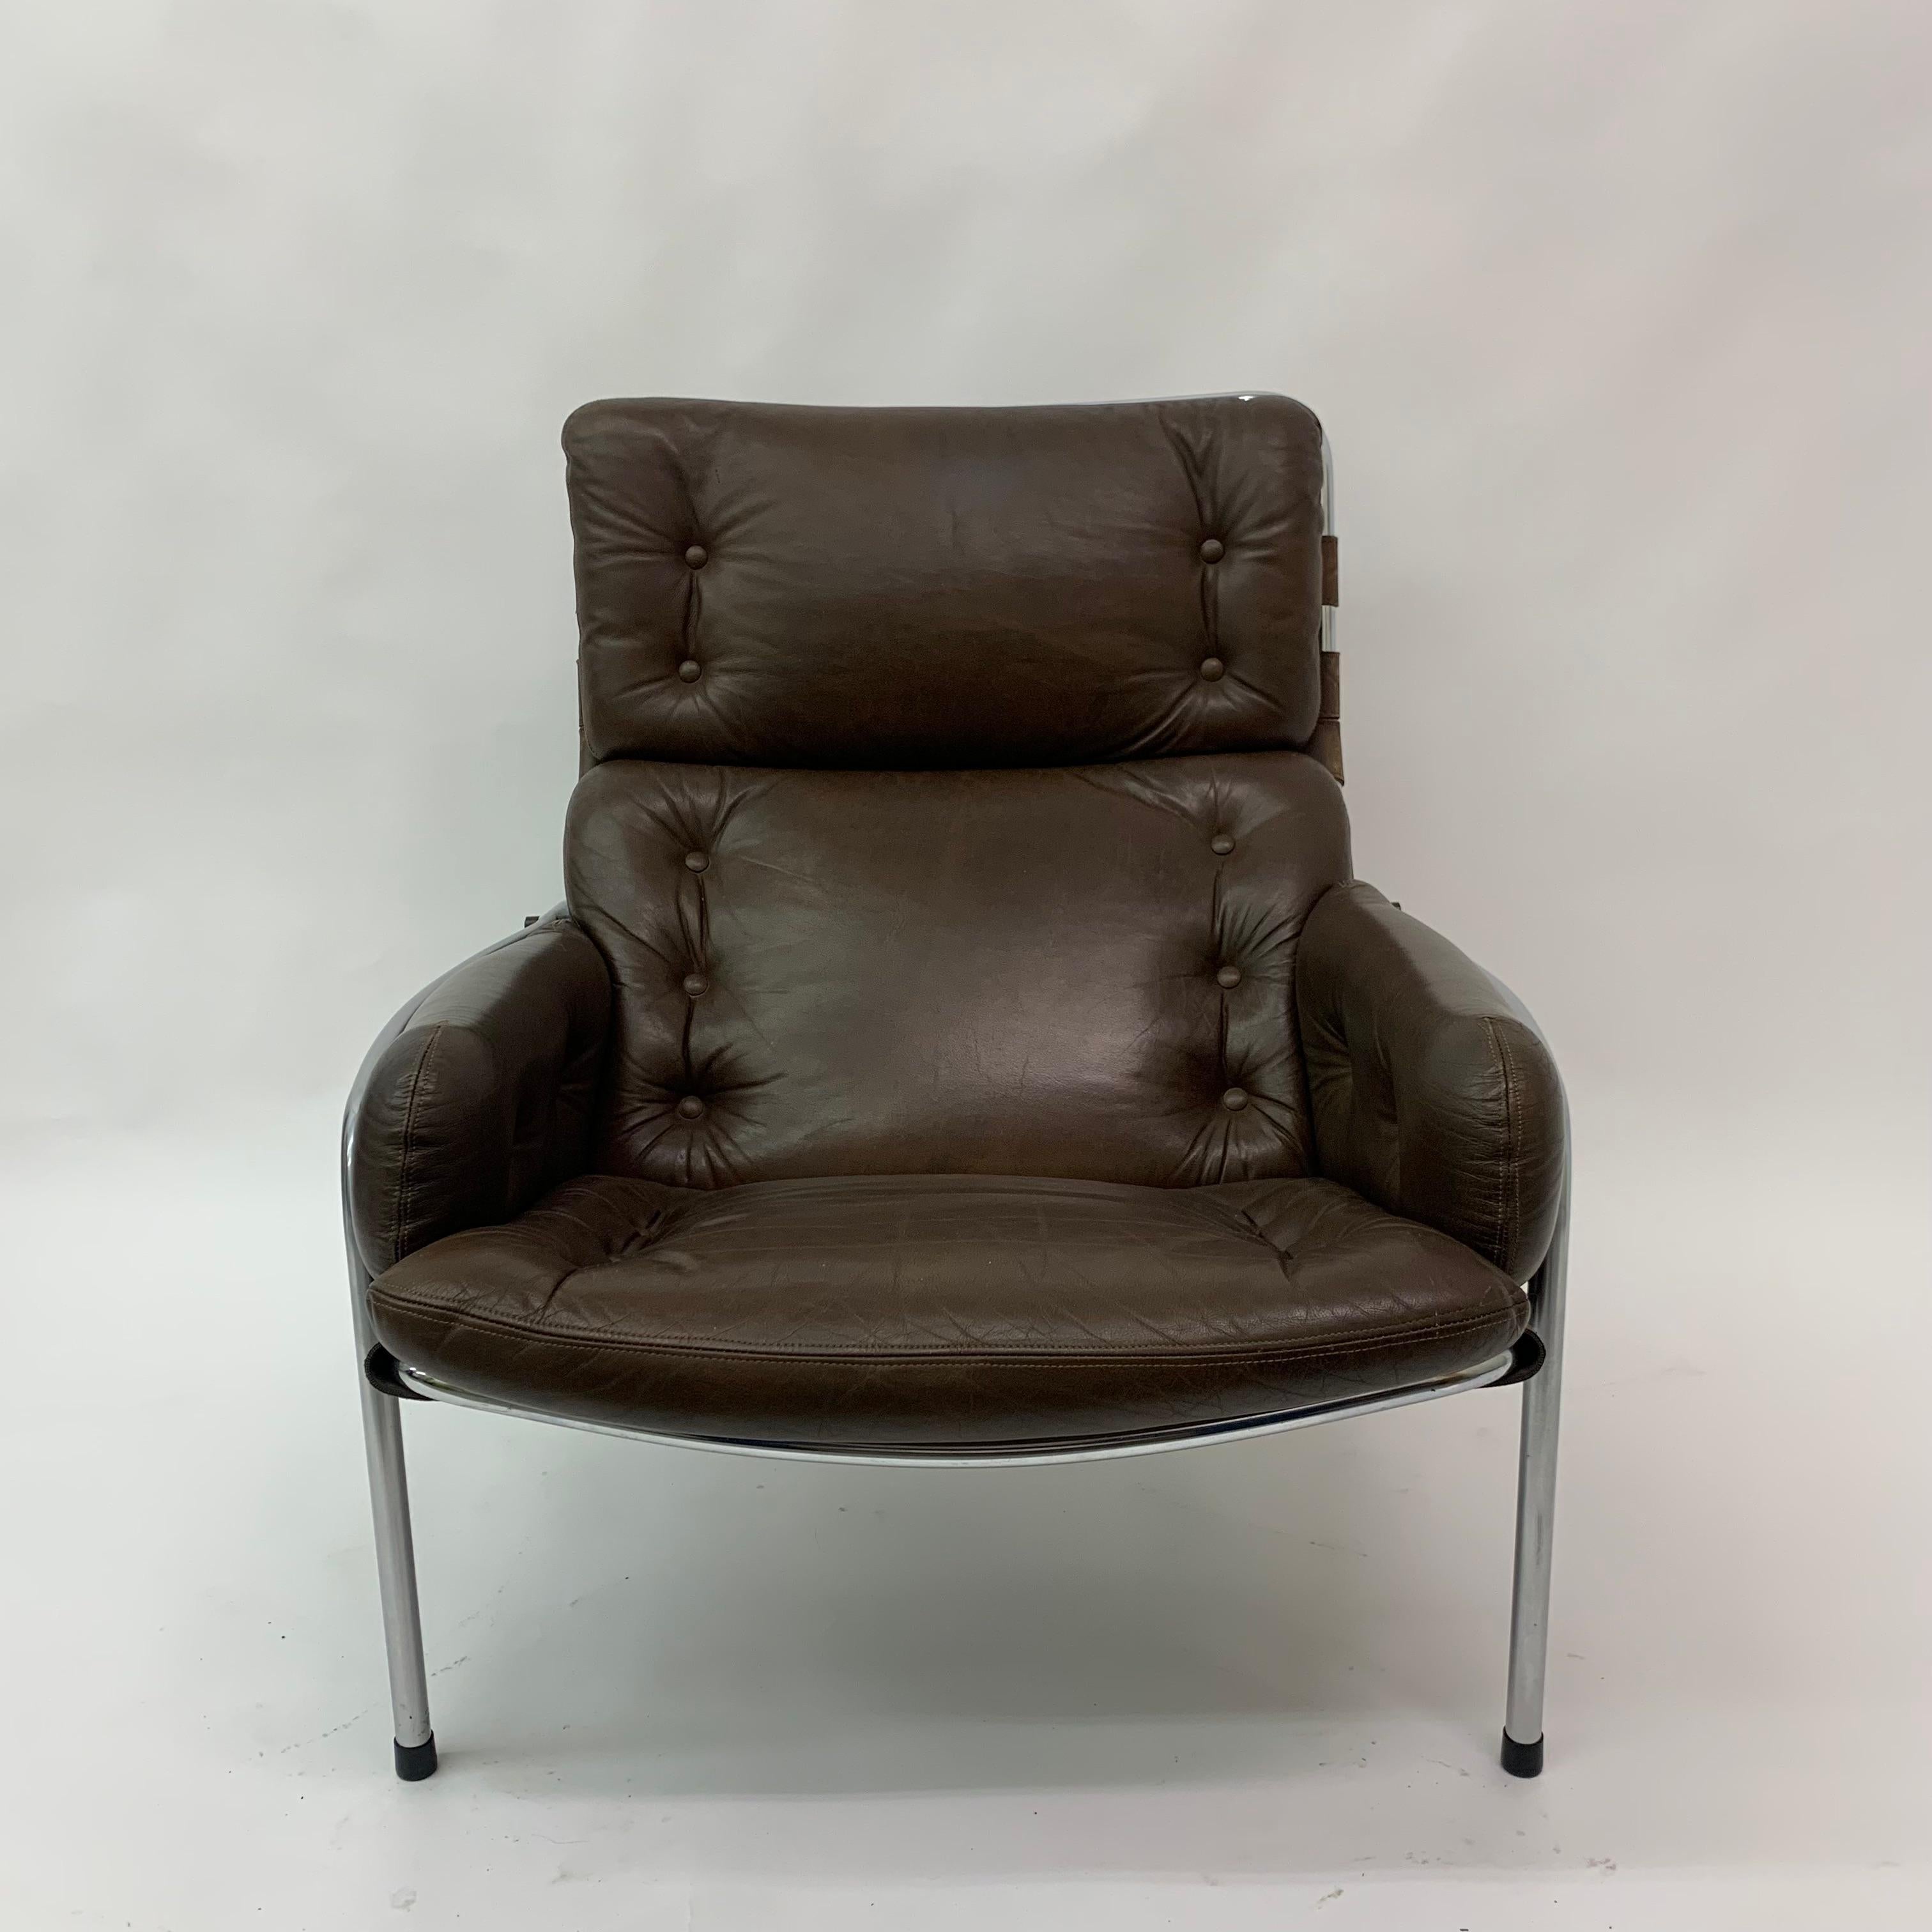 Dutch Spectrum ‘SZ09’ Nagoya Lounge Chair by Martin Visser, 1970s